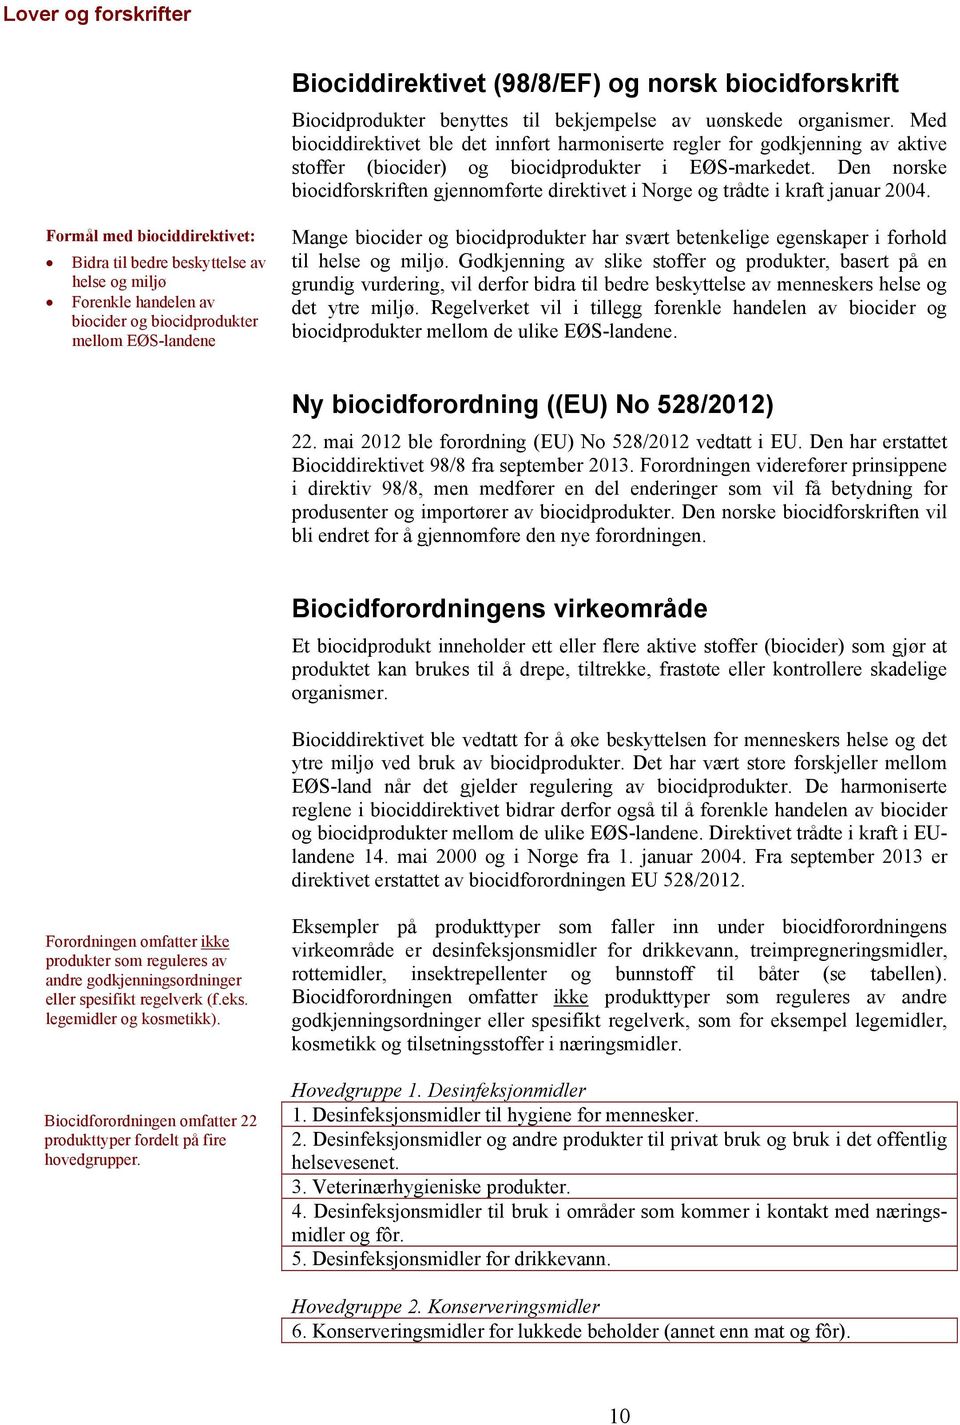 Den norske biocidforskriften gjennomførte direktivet i Norge og trådte i kraft januar 2004.